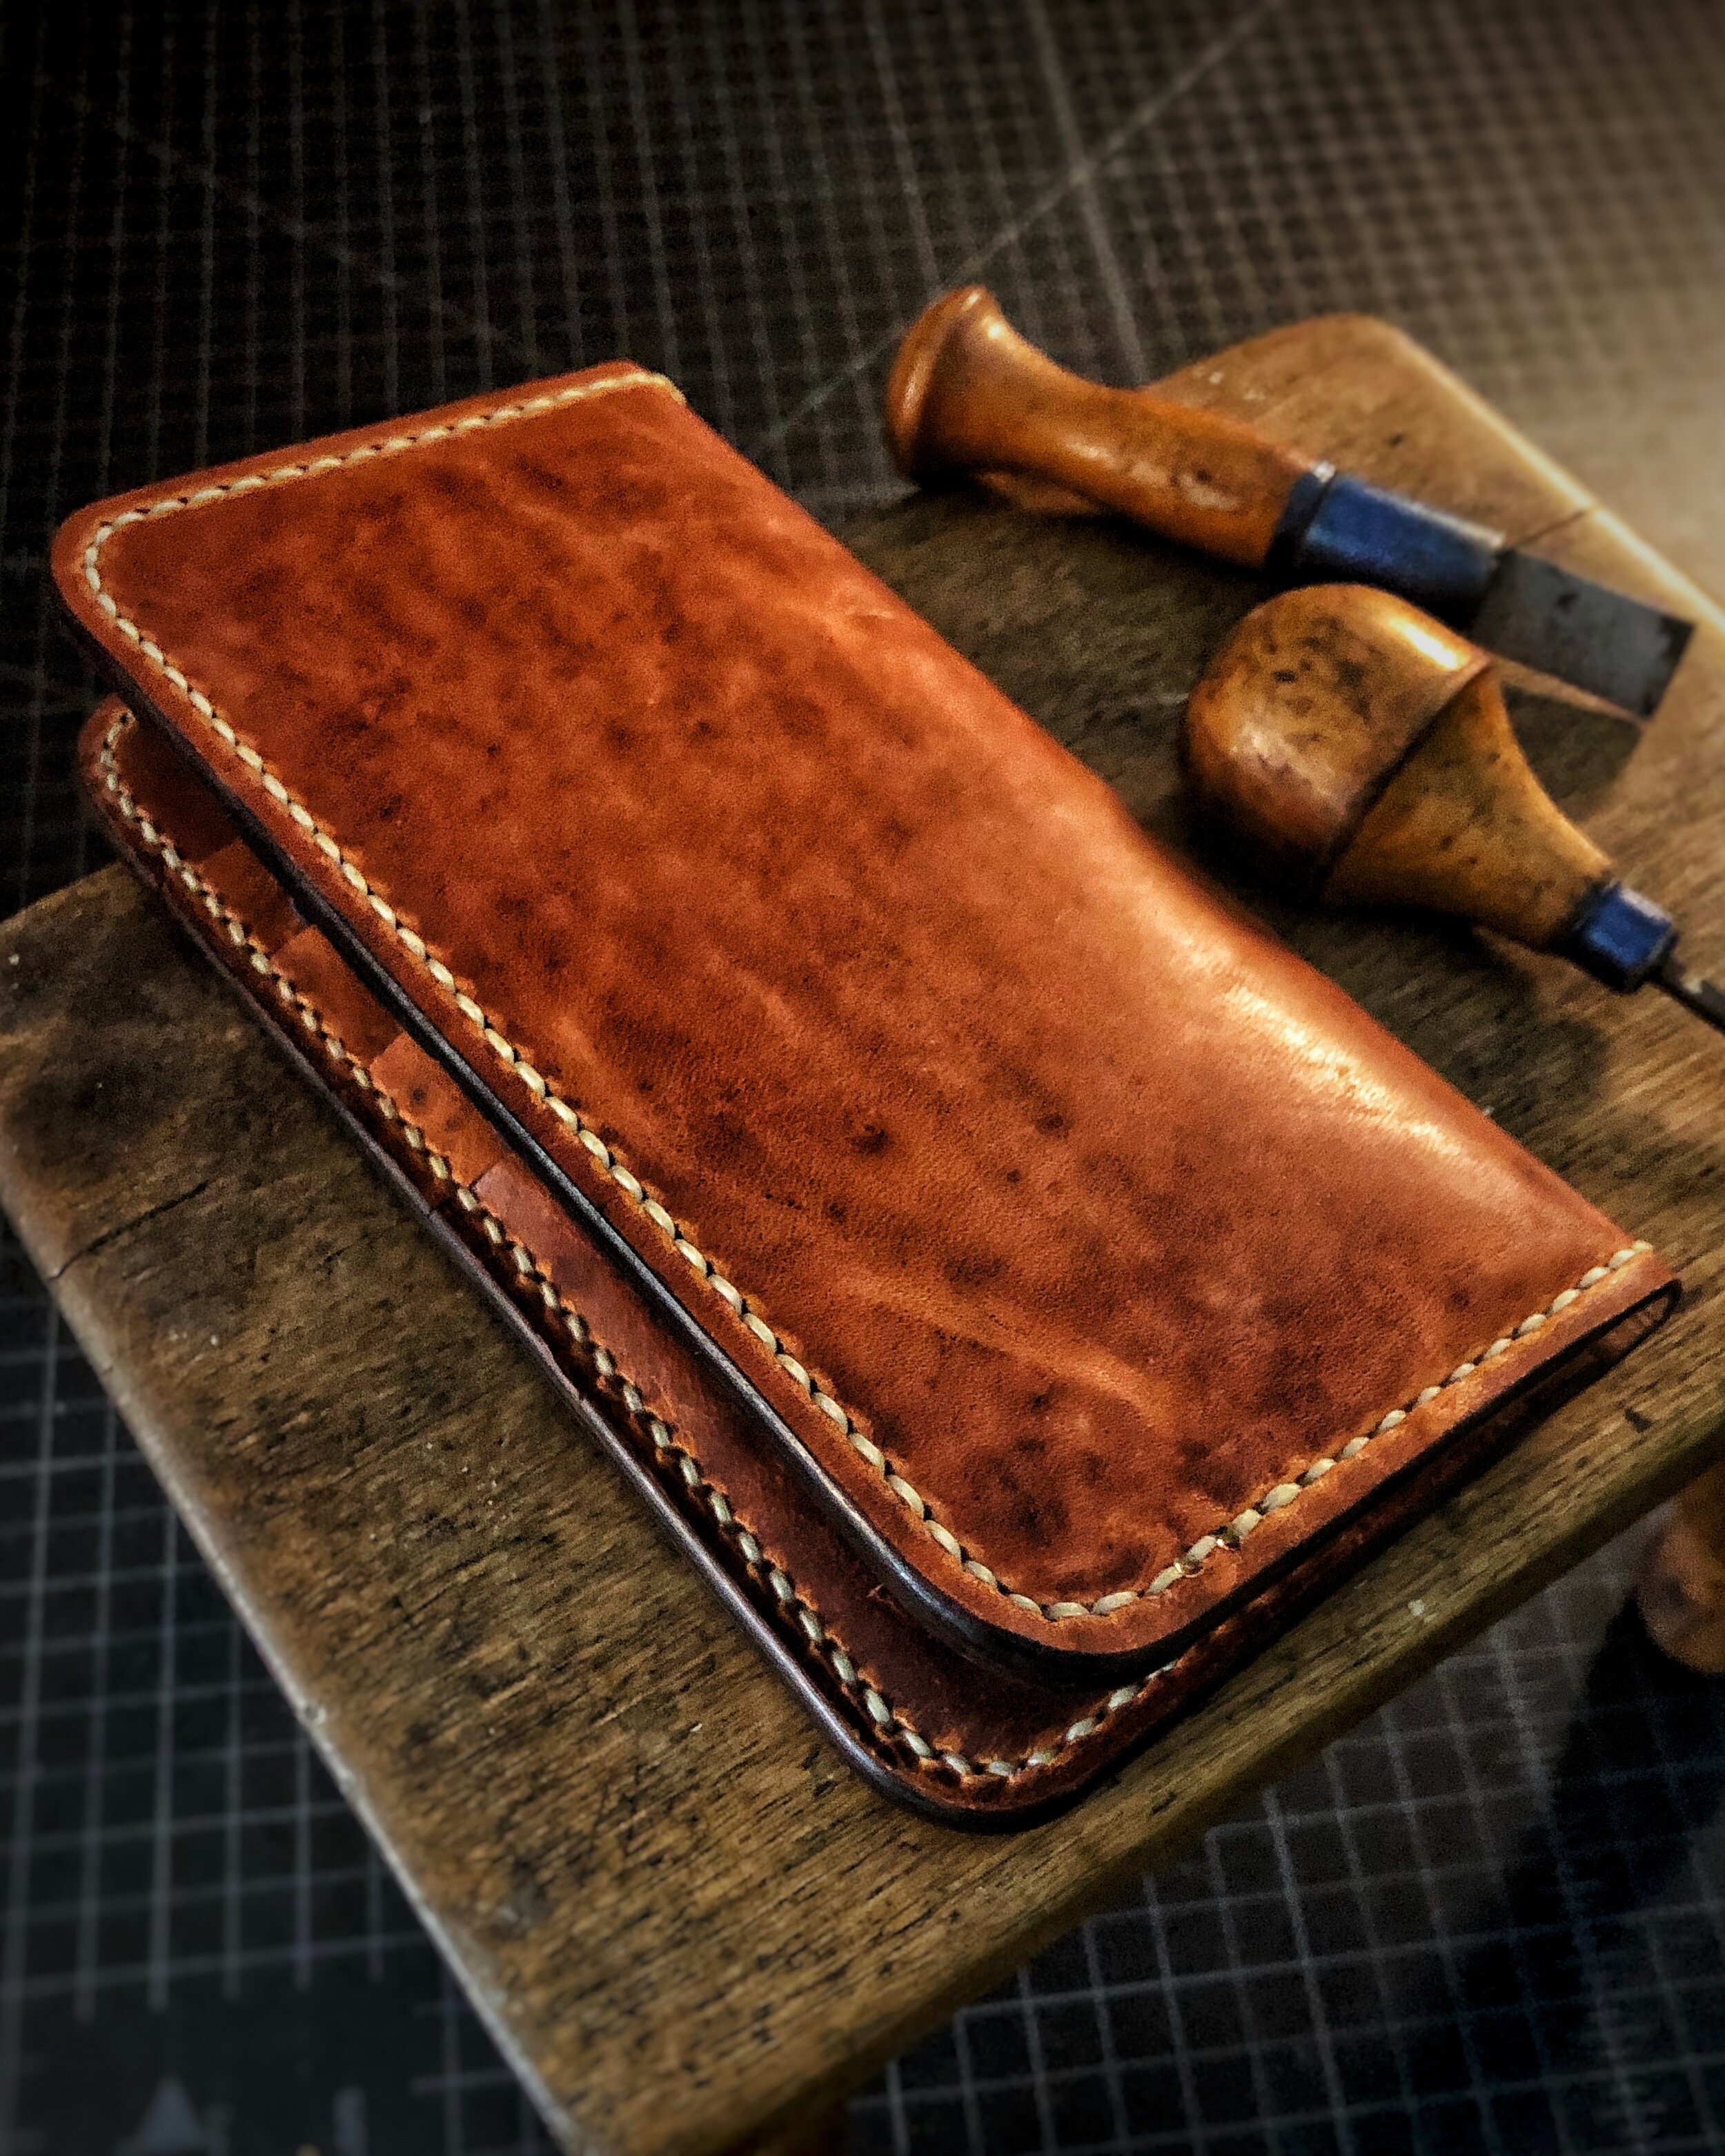 Slim Wallet in Orange Textured Leather – Sazingg